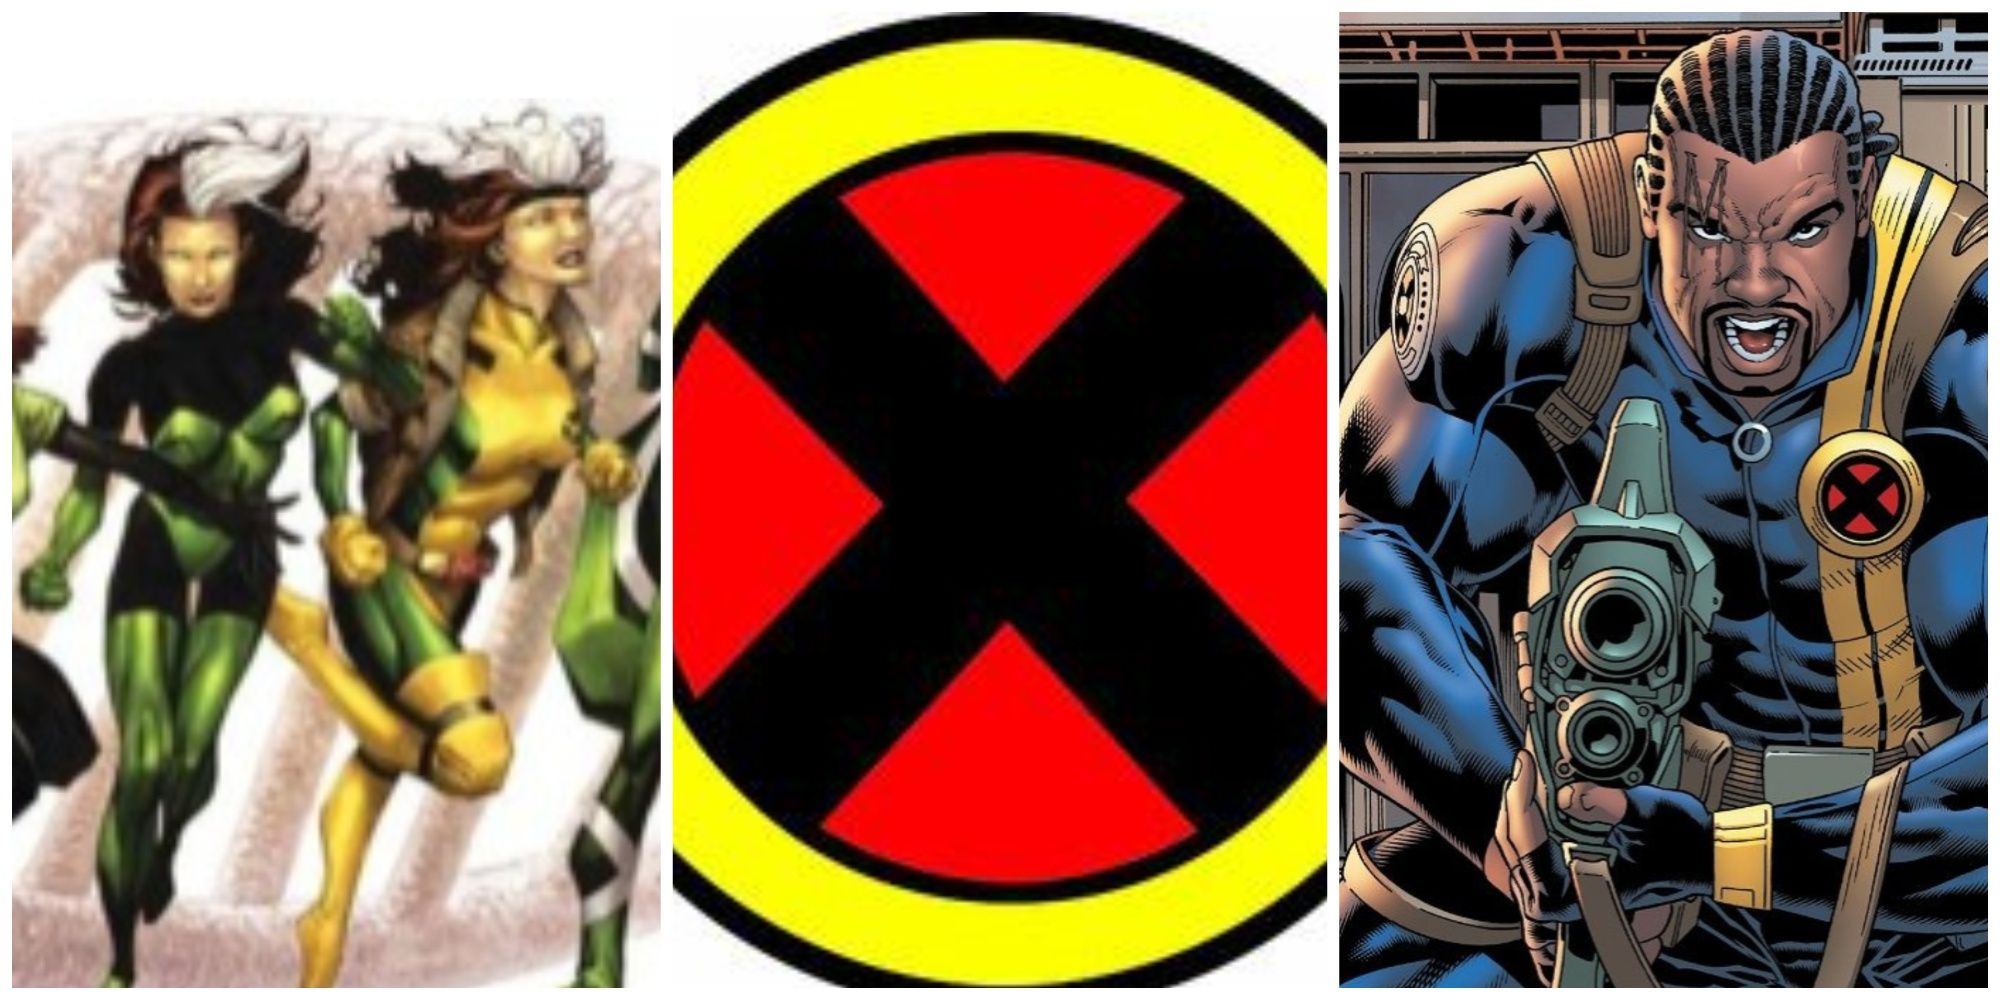 X-Men: Apocalypse Will Show Nightcrawler's Swashbuckling Side